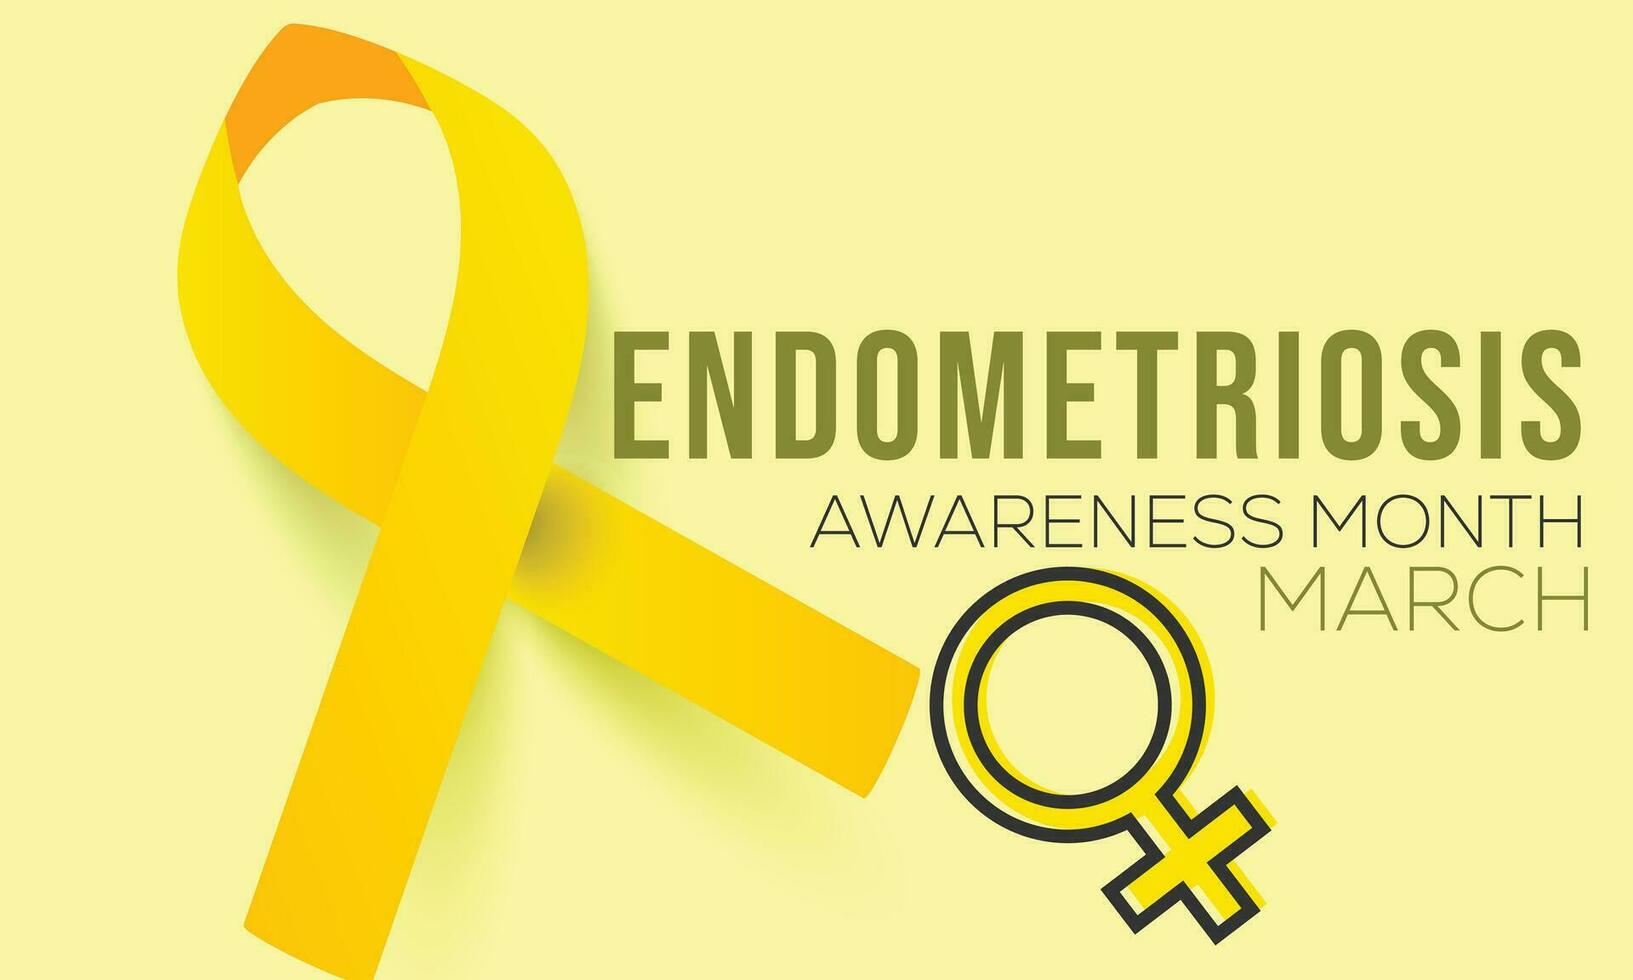 Endometriosis awareness month. background, banner, card, poster, template. Vector illustration.